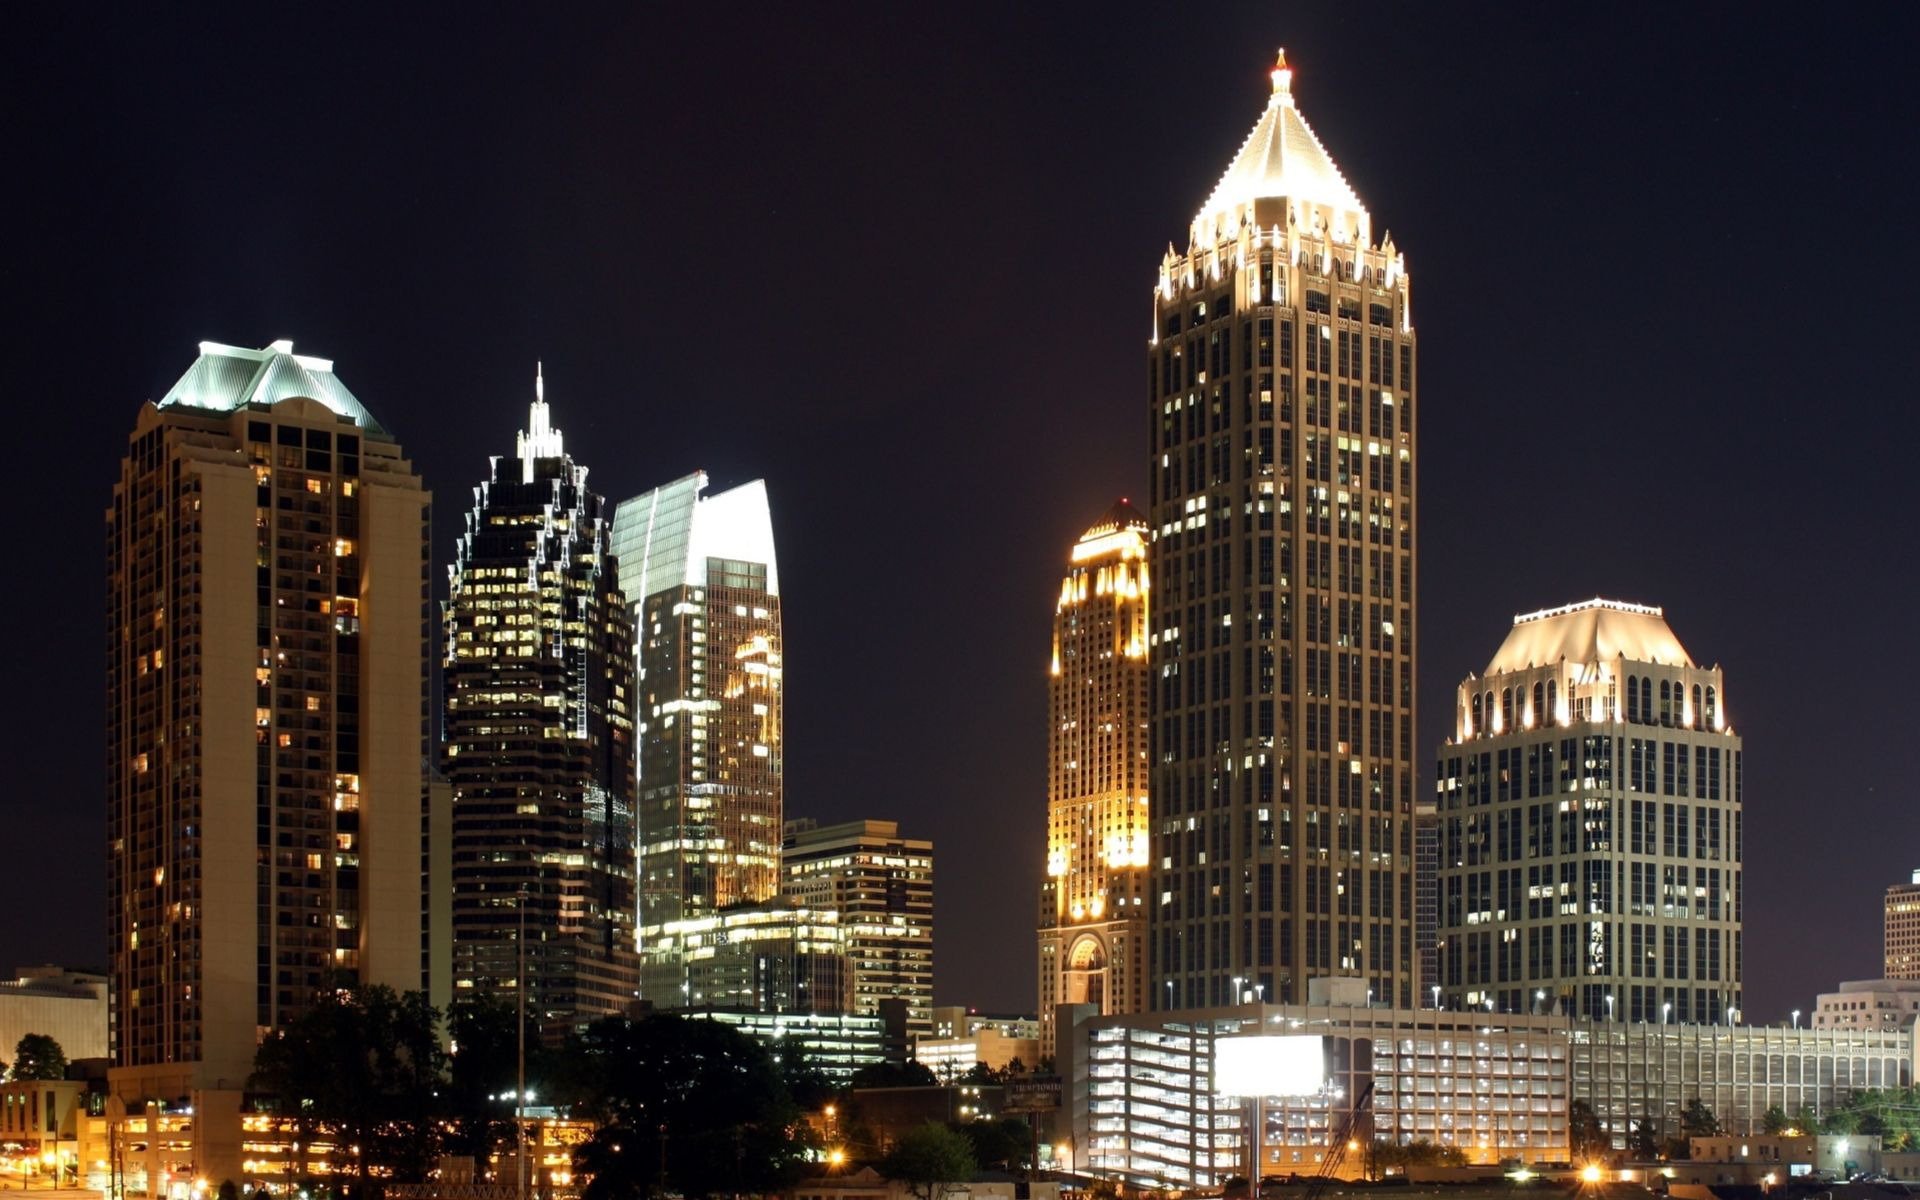 Atlanta's night skyline.